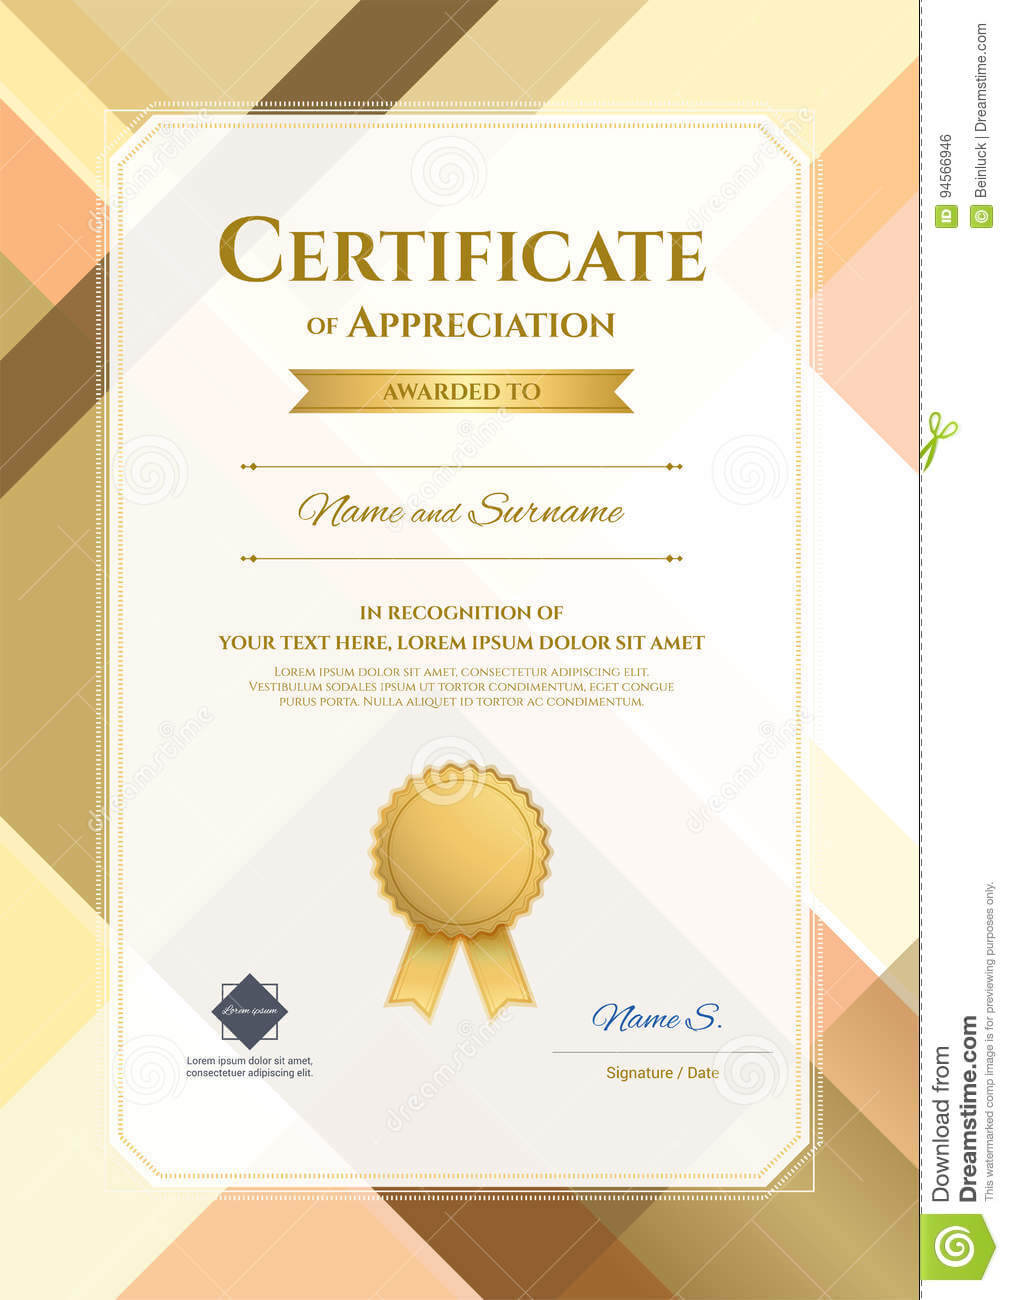 Portrait Modern Certificate Of Appreciation Template With Regarding Walking Certificate Templates